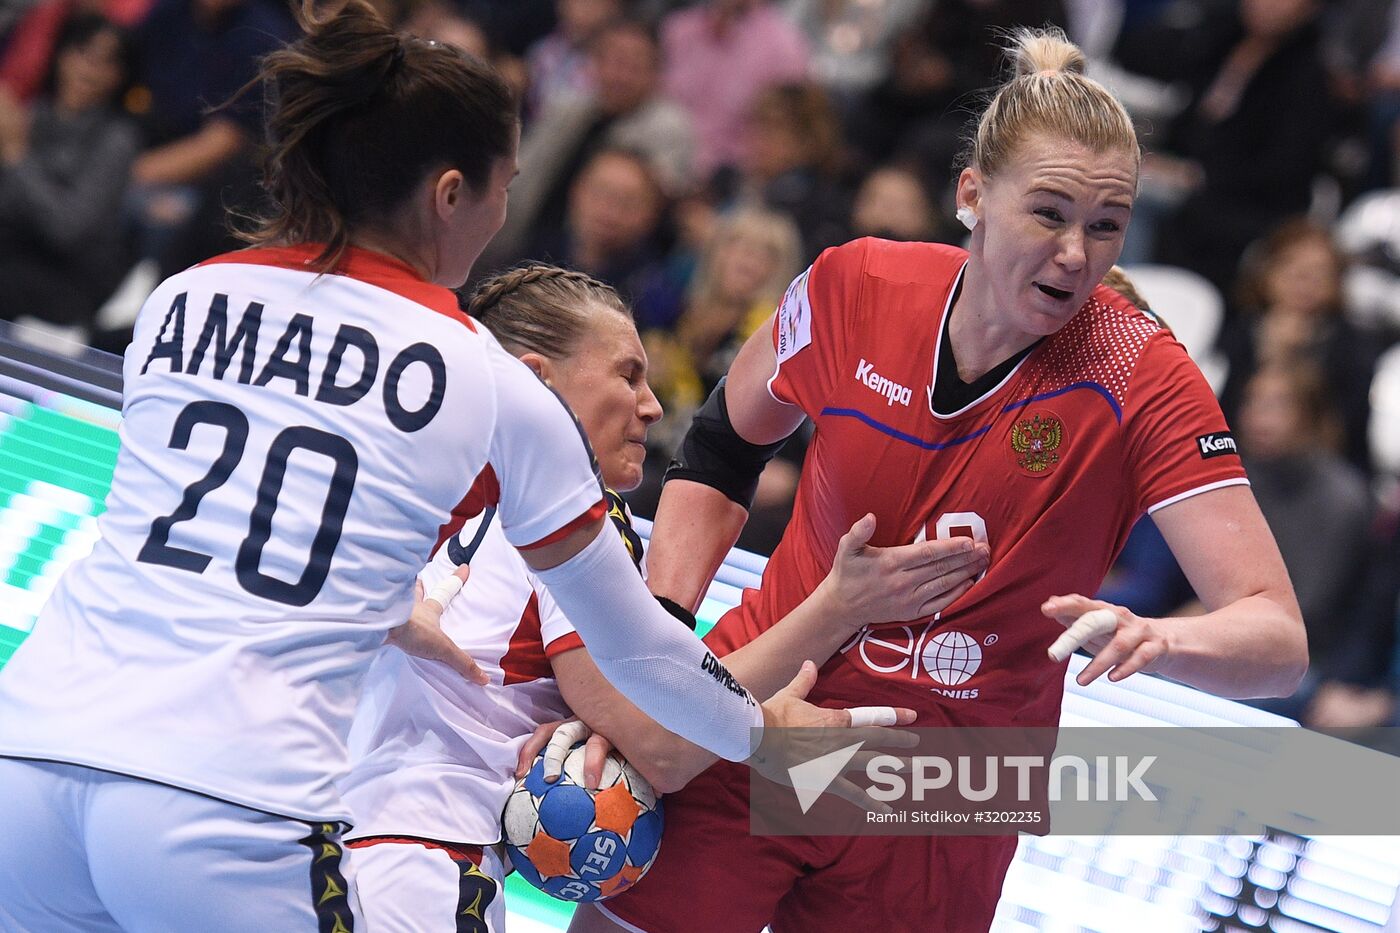 Handball. 2018 European Women's Handball Championship qualification match. Russia vs Portugal